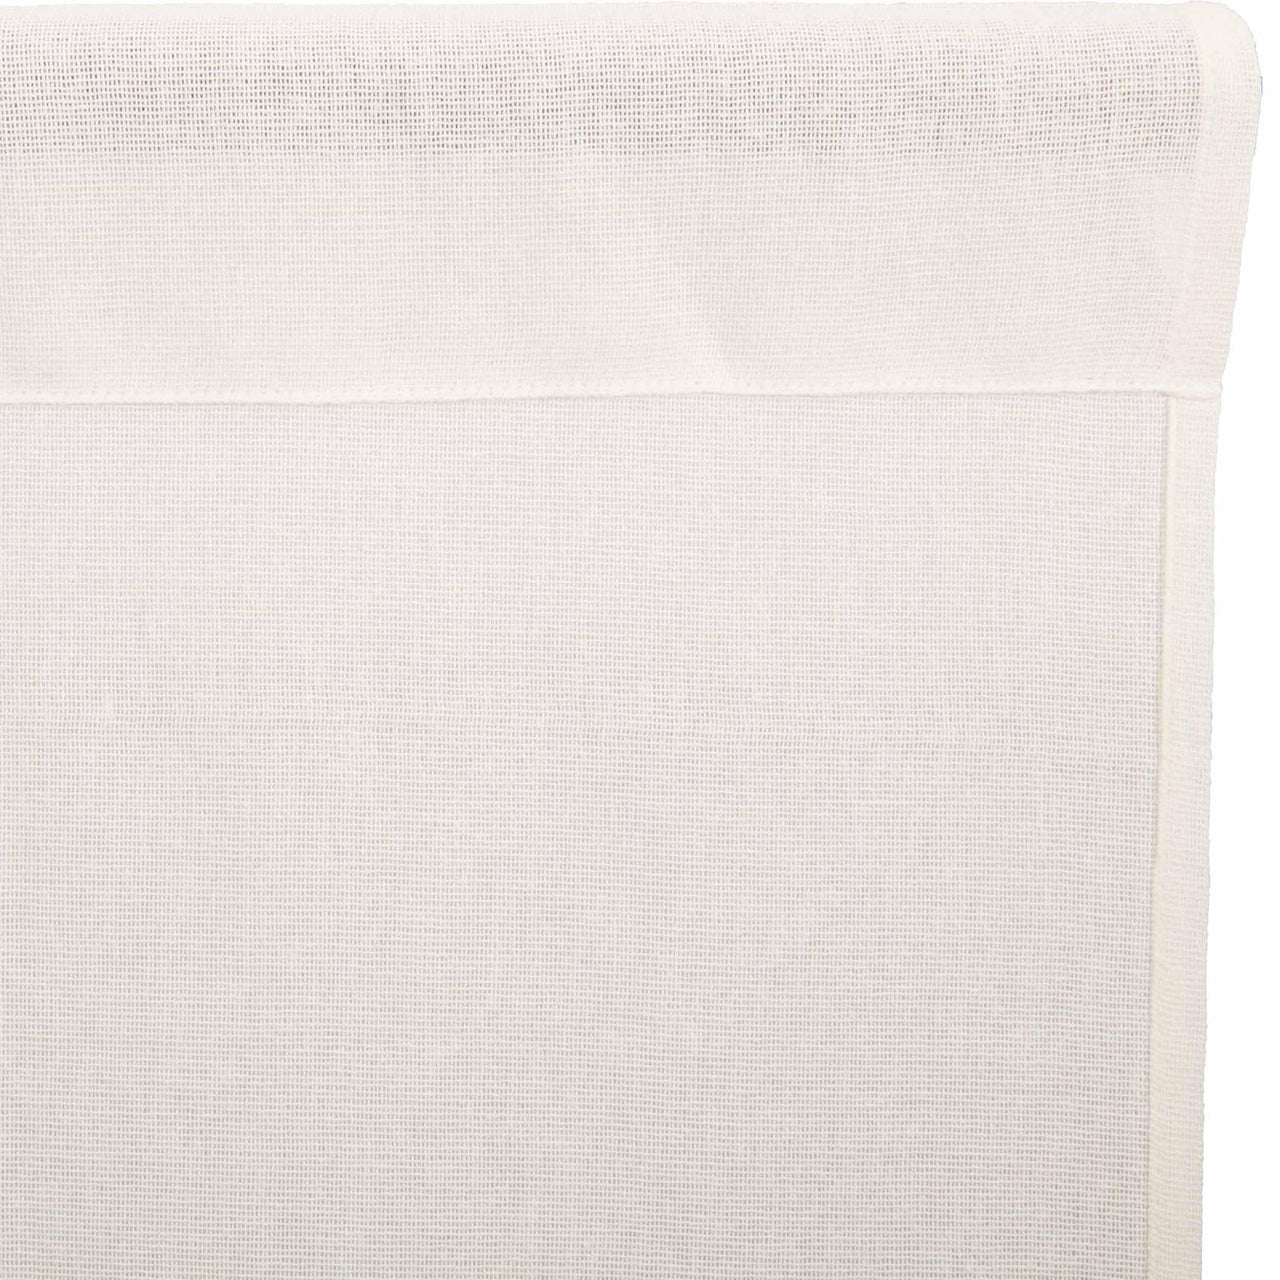 Tobacco Cloth Antique White Prairie Long Panel Curtain Fringed Set of 2 84x36x18 VHC Brands - The Fox Decor